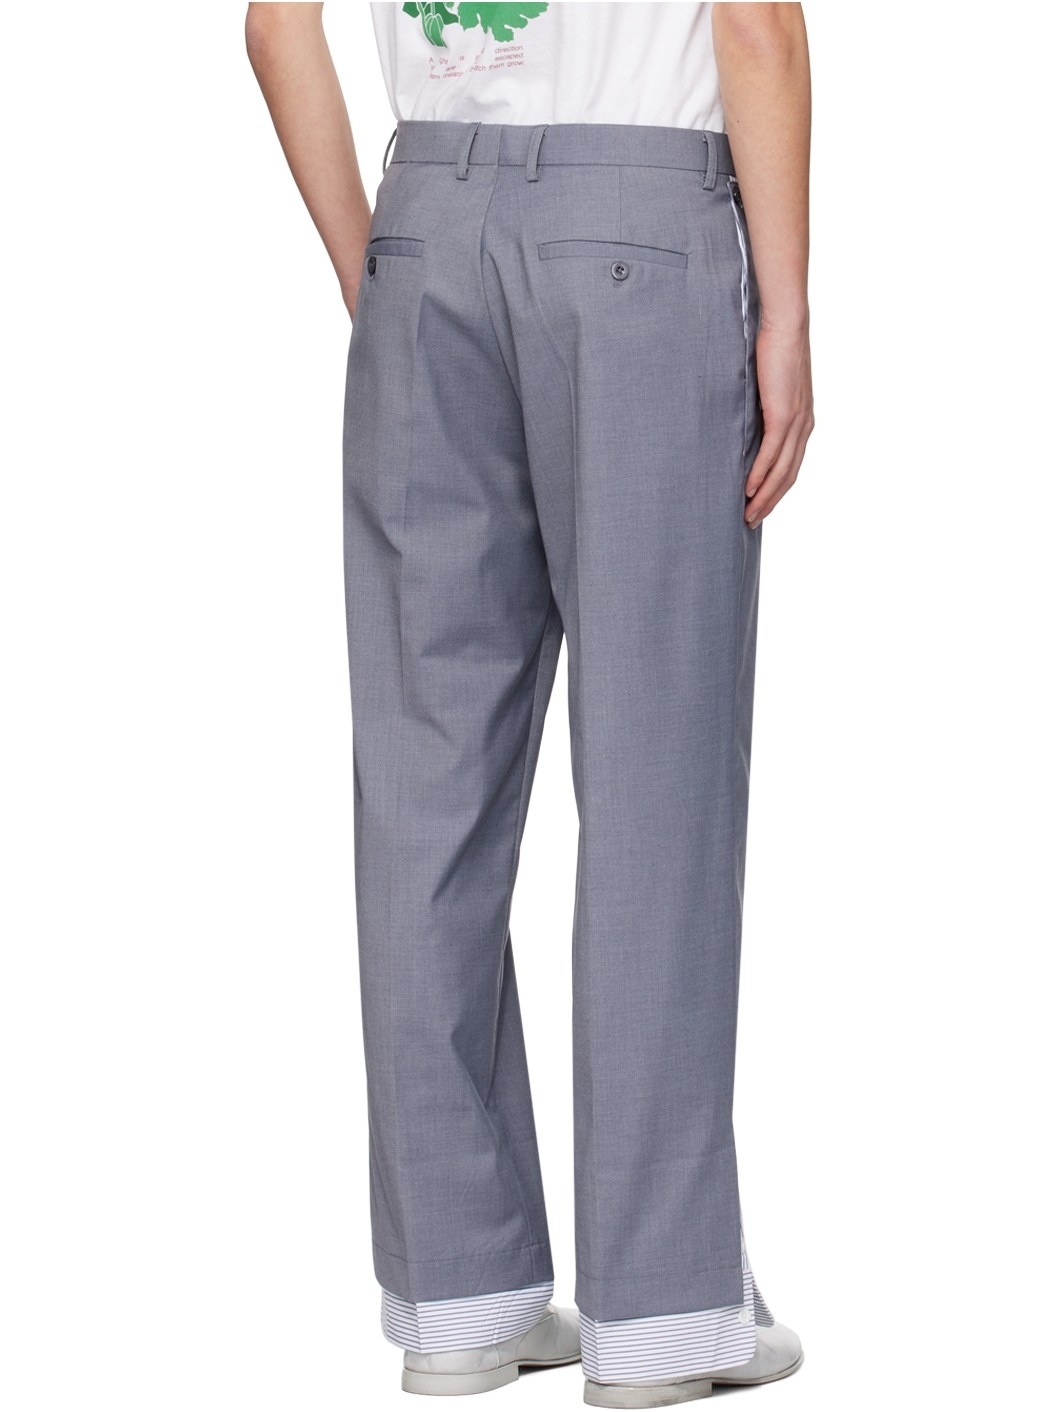 Gray Cuff Trousers - 3